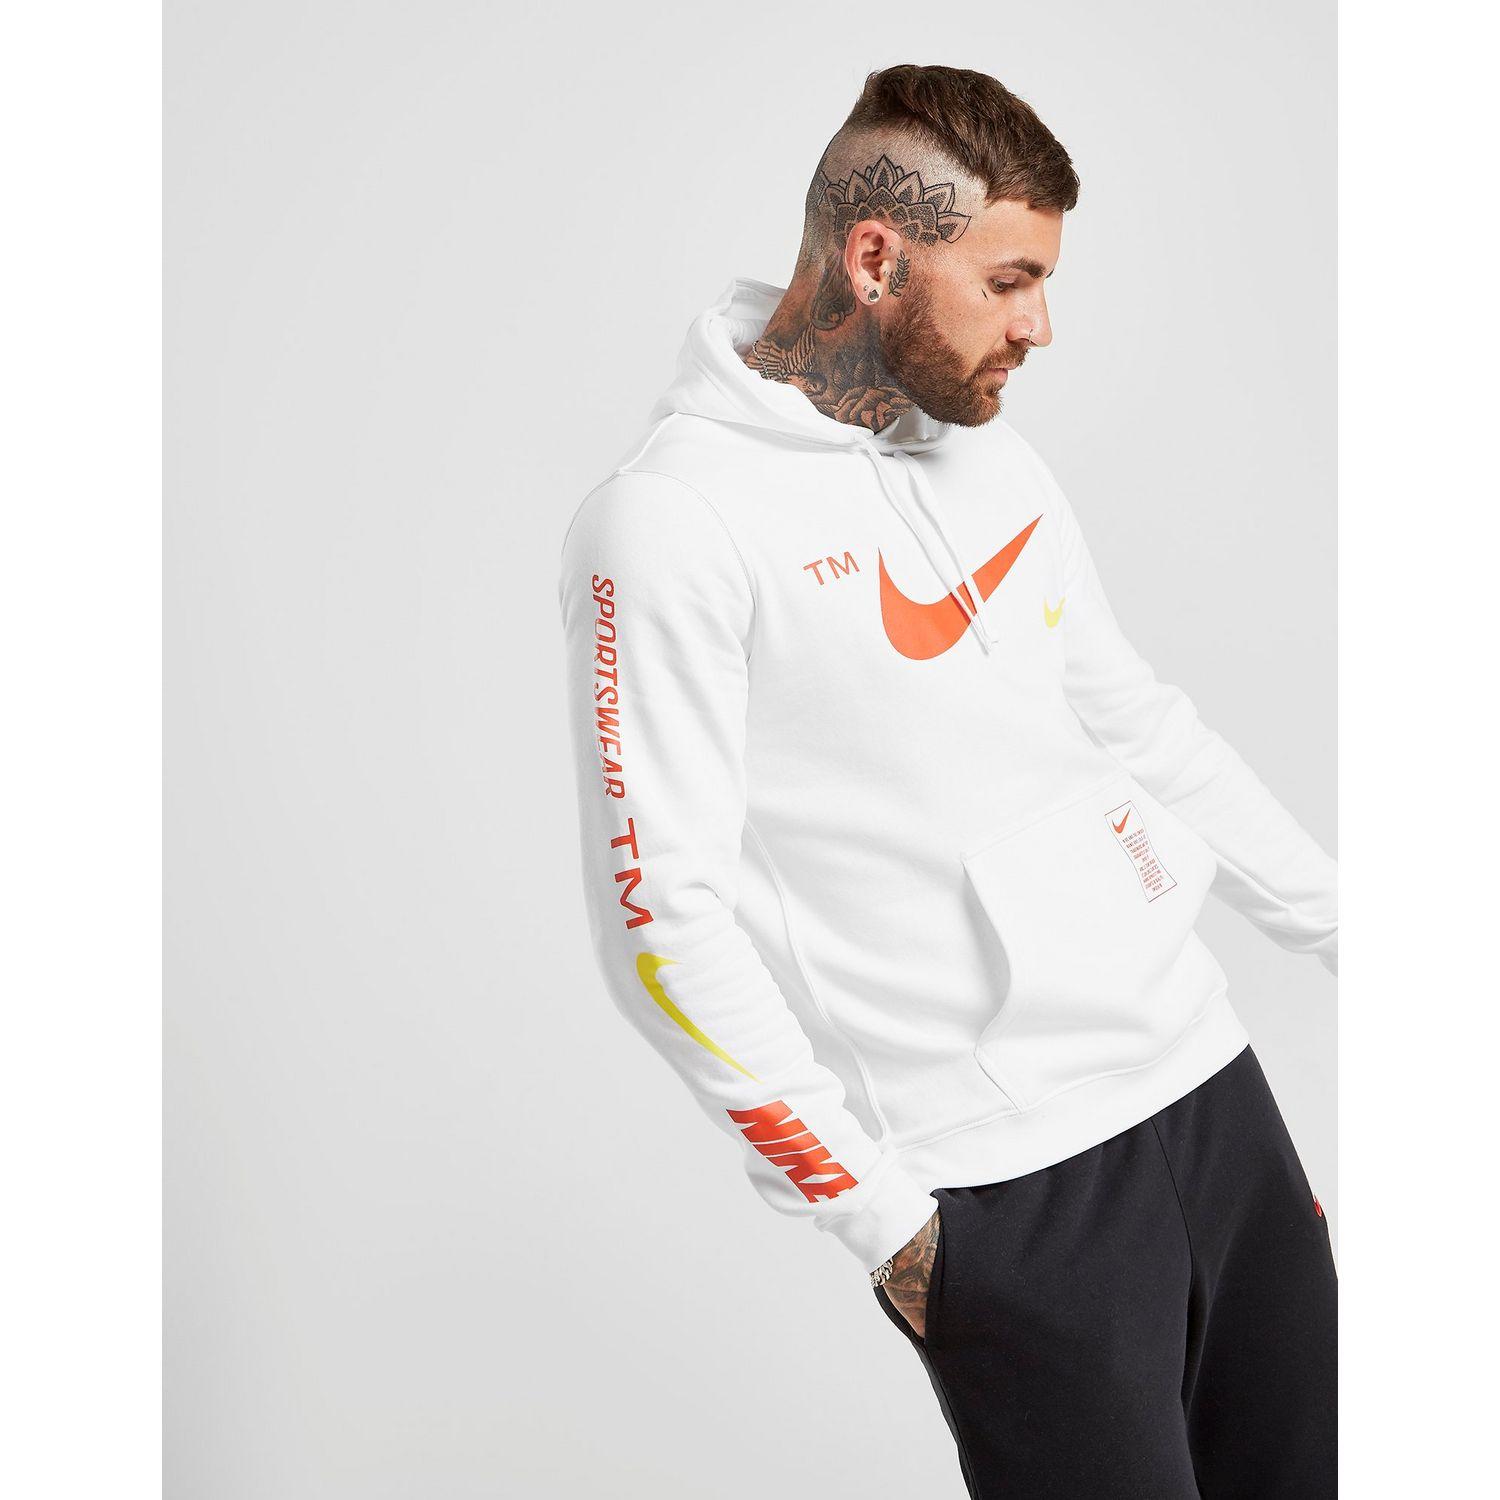 Nike Overbranded Hoodie Italy, SAVE 35% - oxforddowns.com